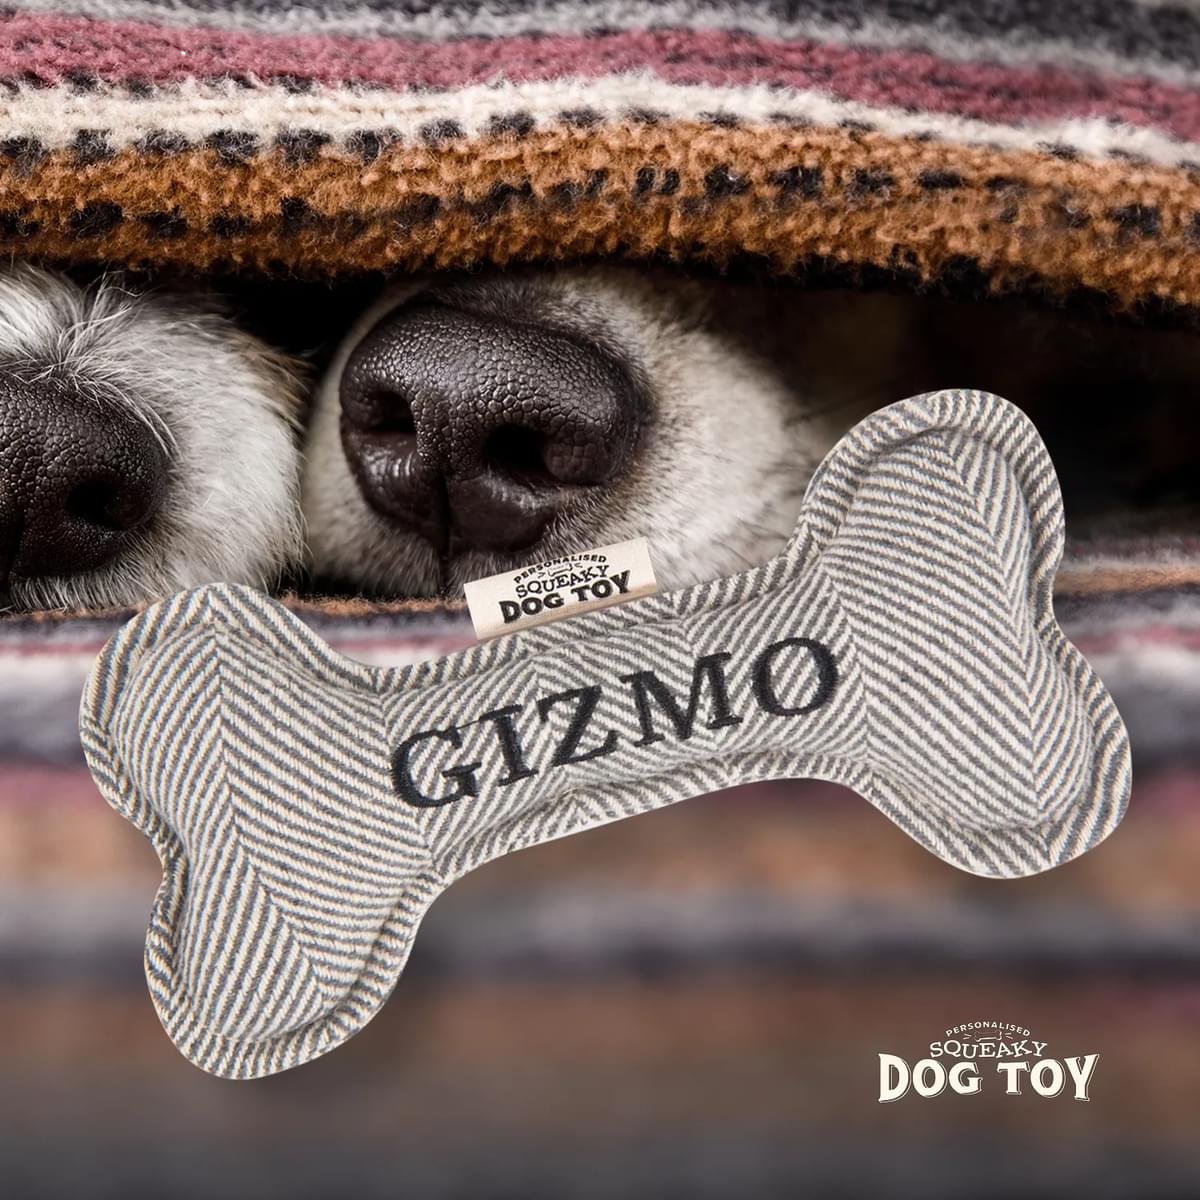 Named Squeaky Dog Toy- Gizmo. Bone shaped herringbone tweed pattern dog toy. 